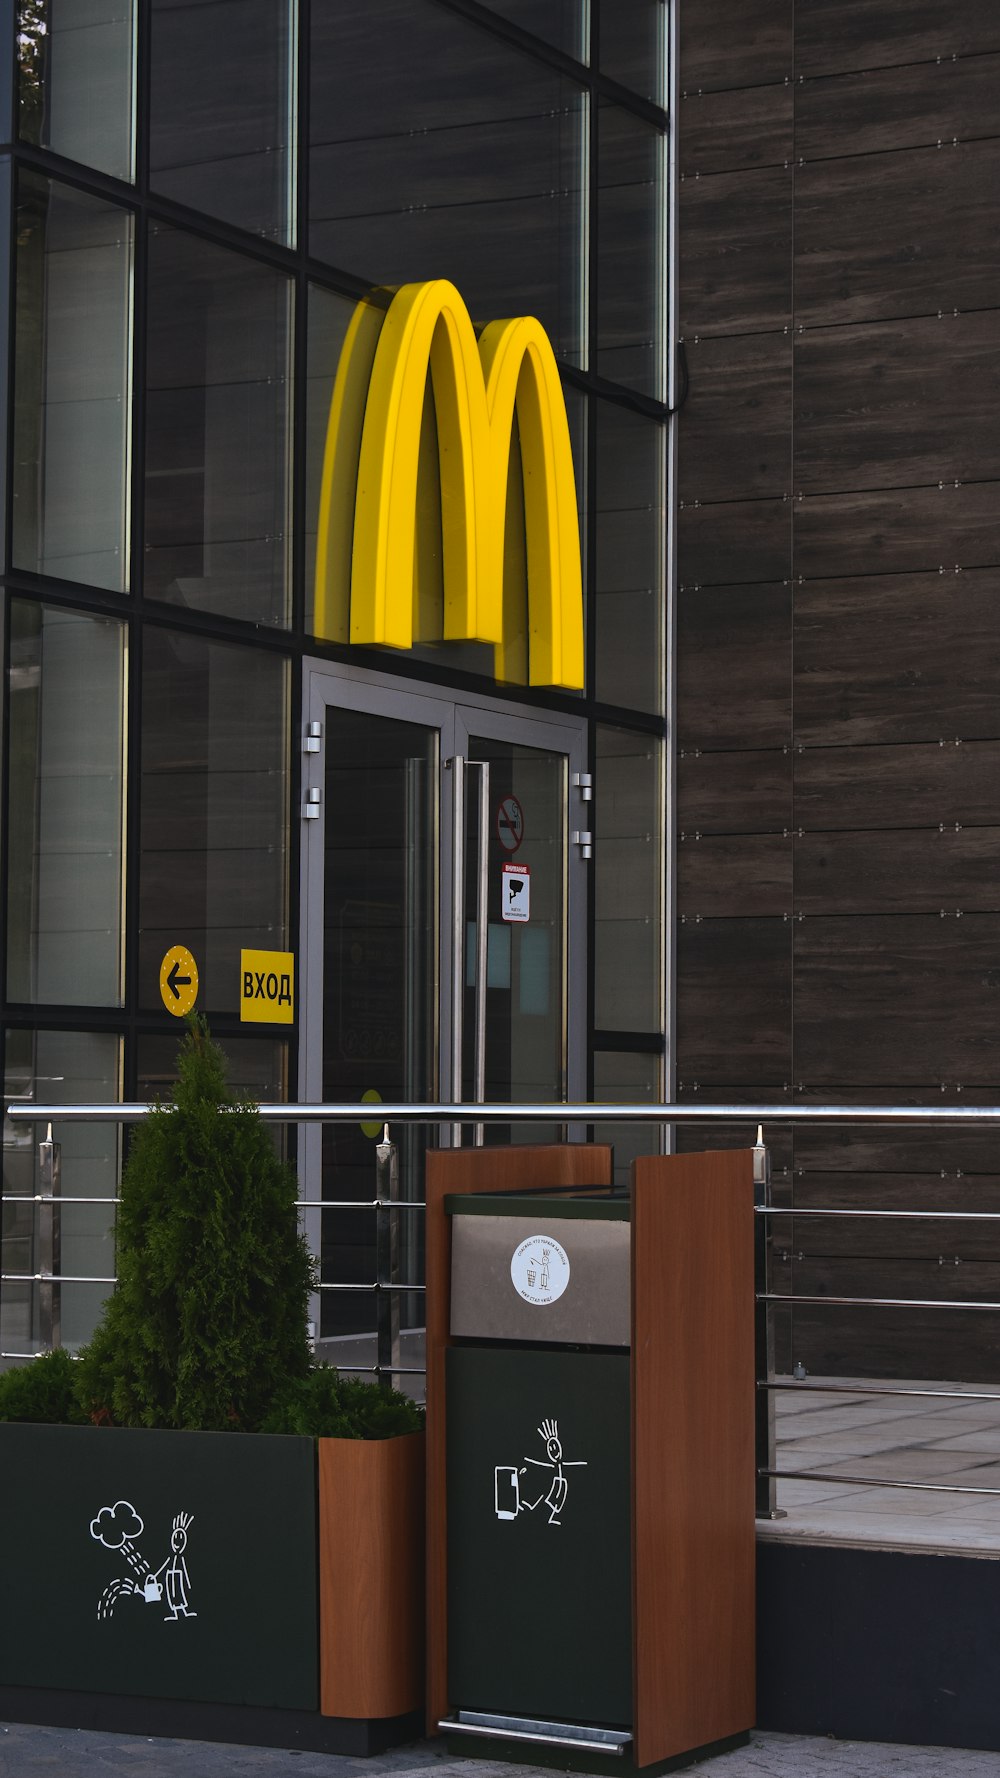 a mcdonald's restaurant with a large yellow mcdonald's sign